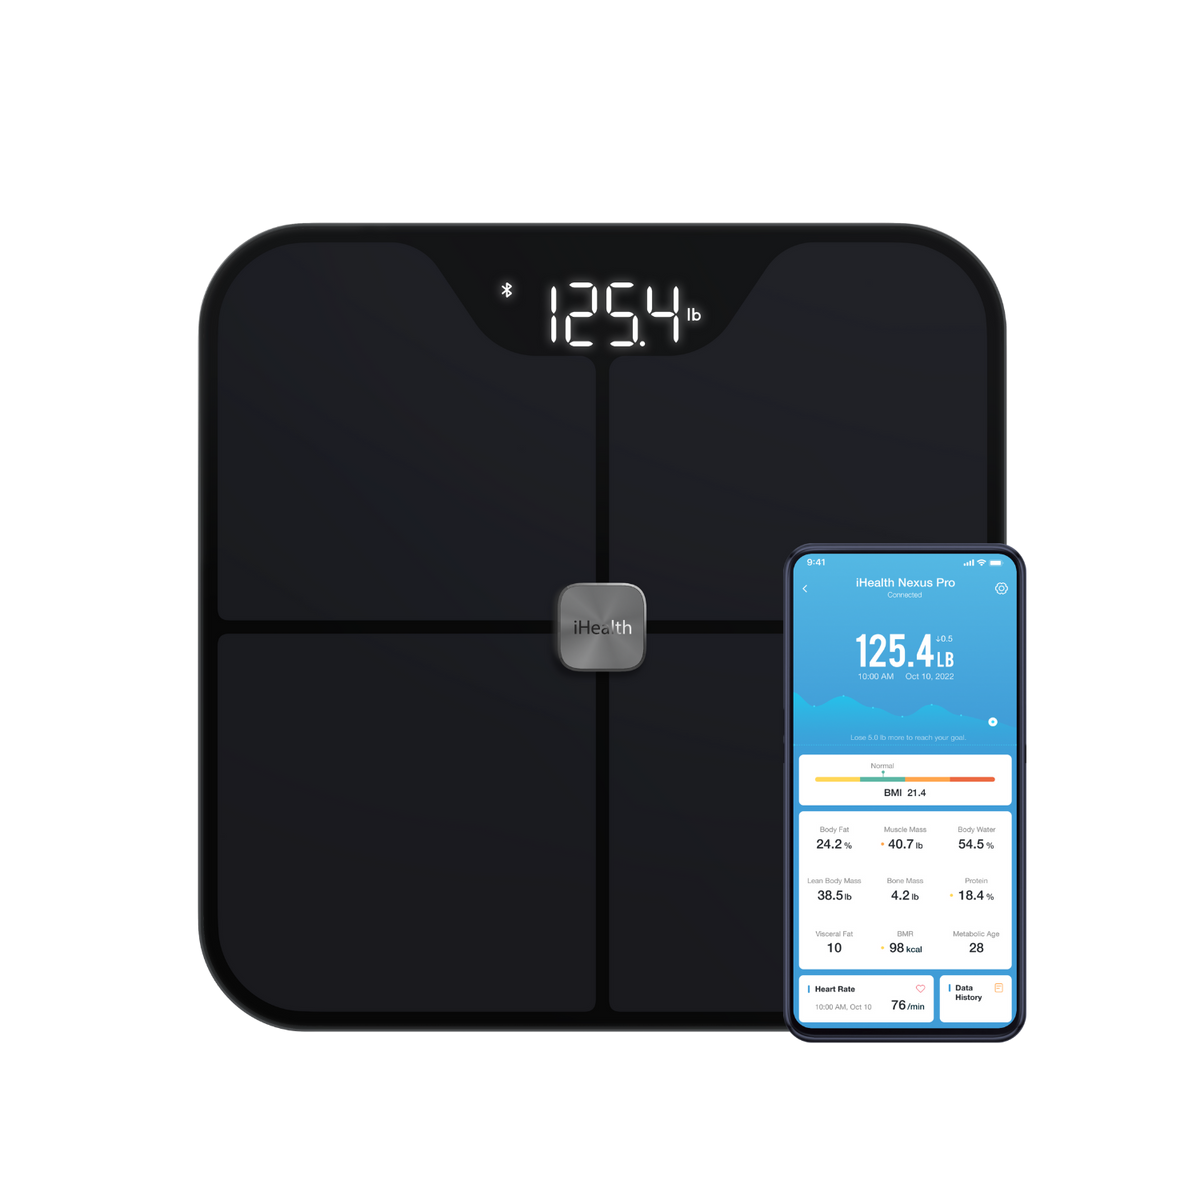 iHealth Nexus Pro Wireless Body Composition Scale $39.99